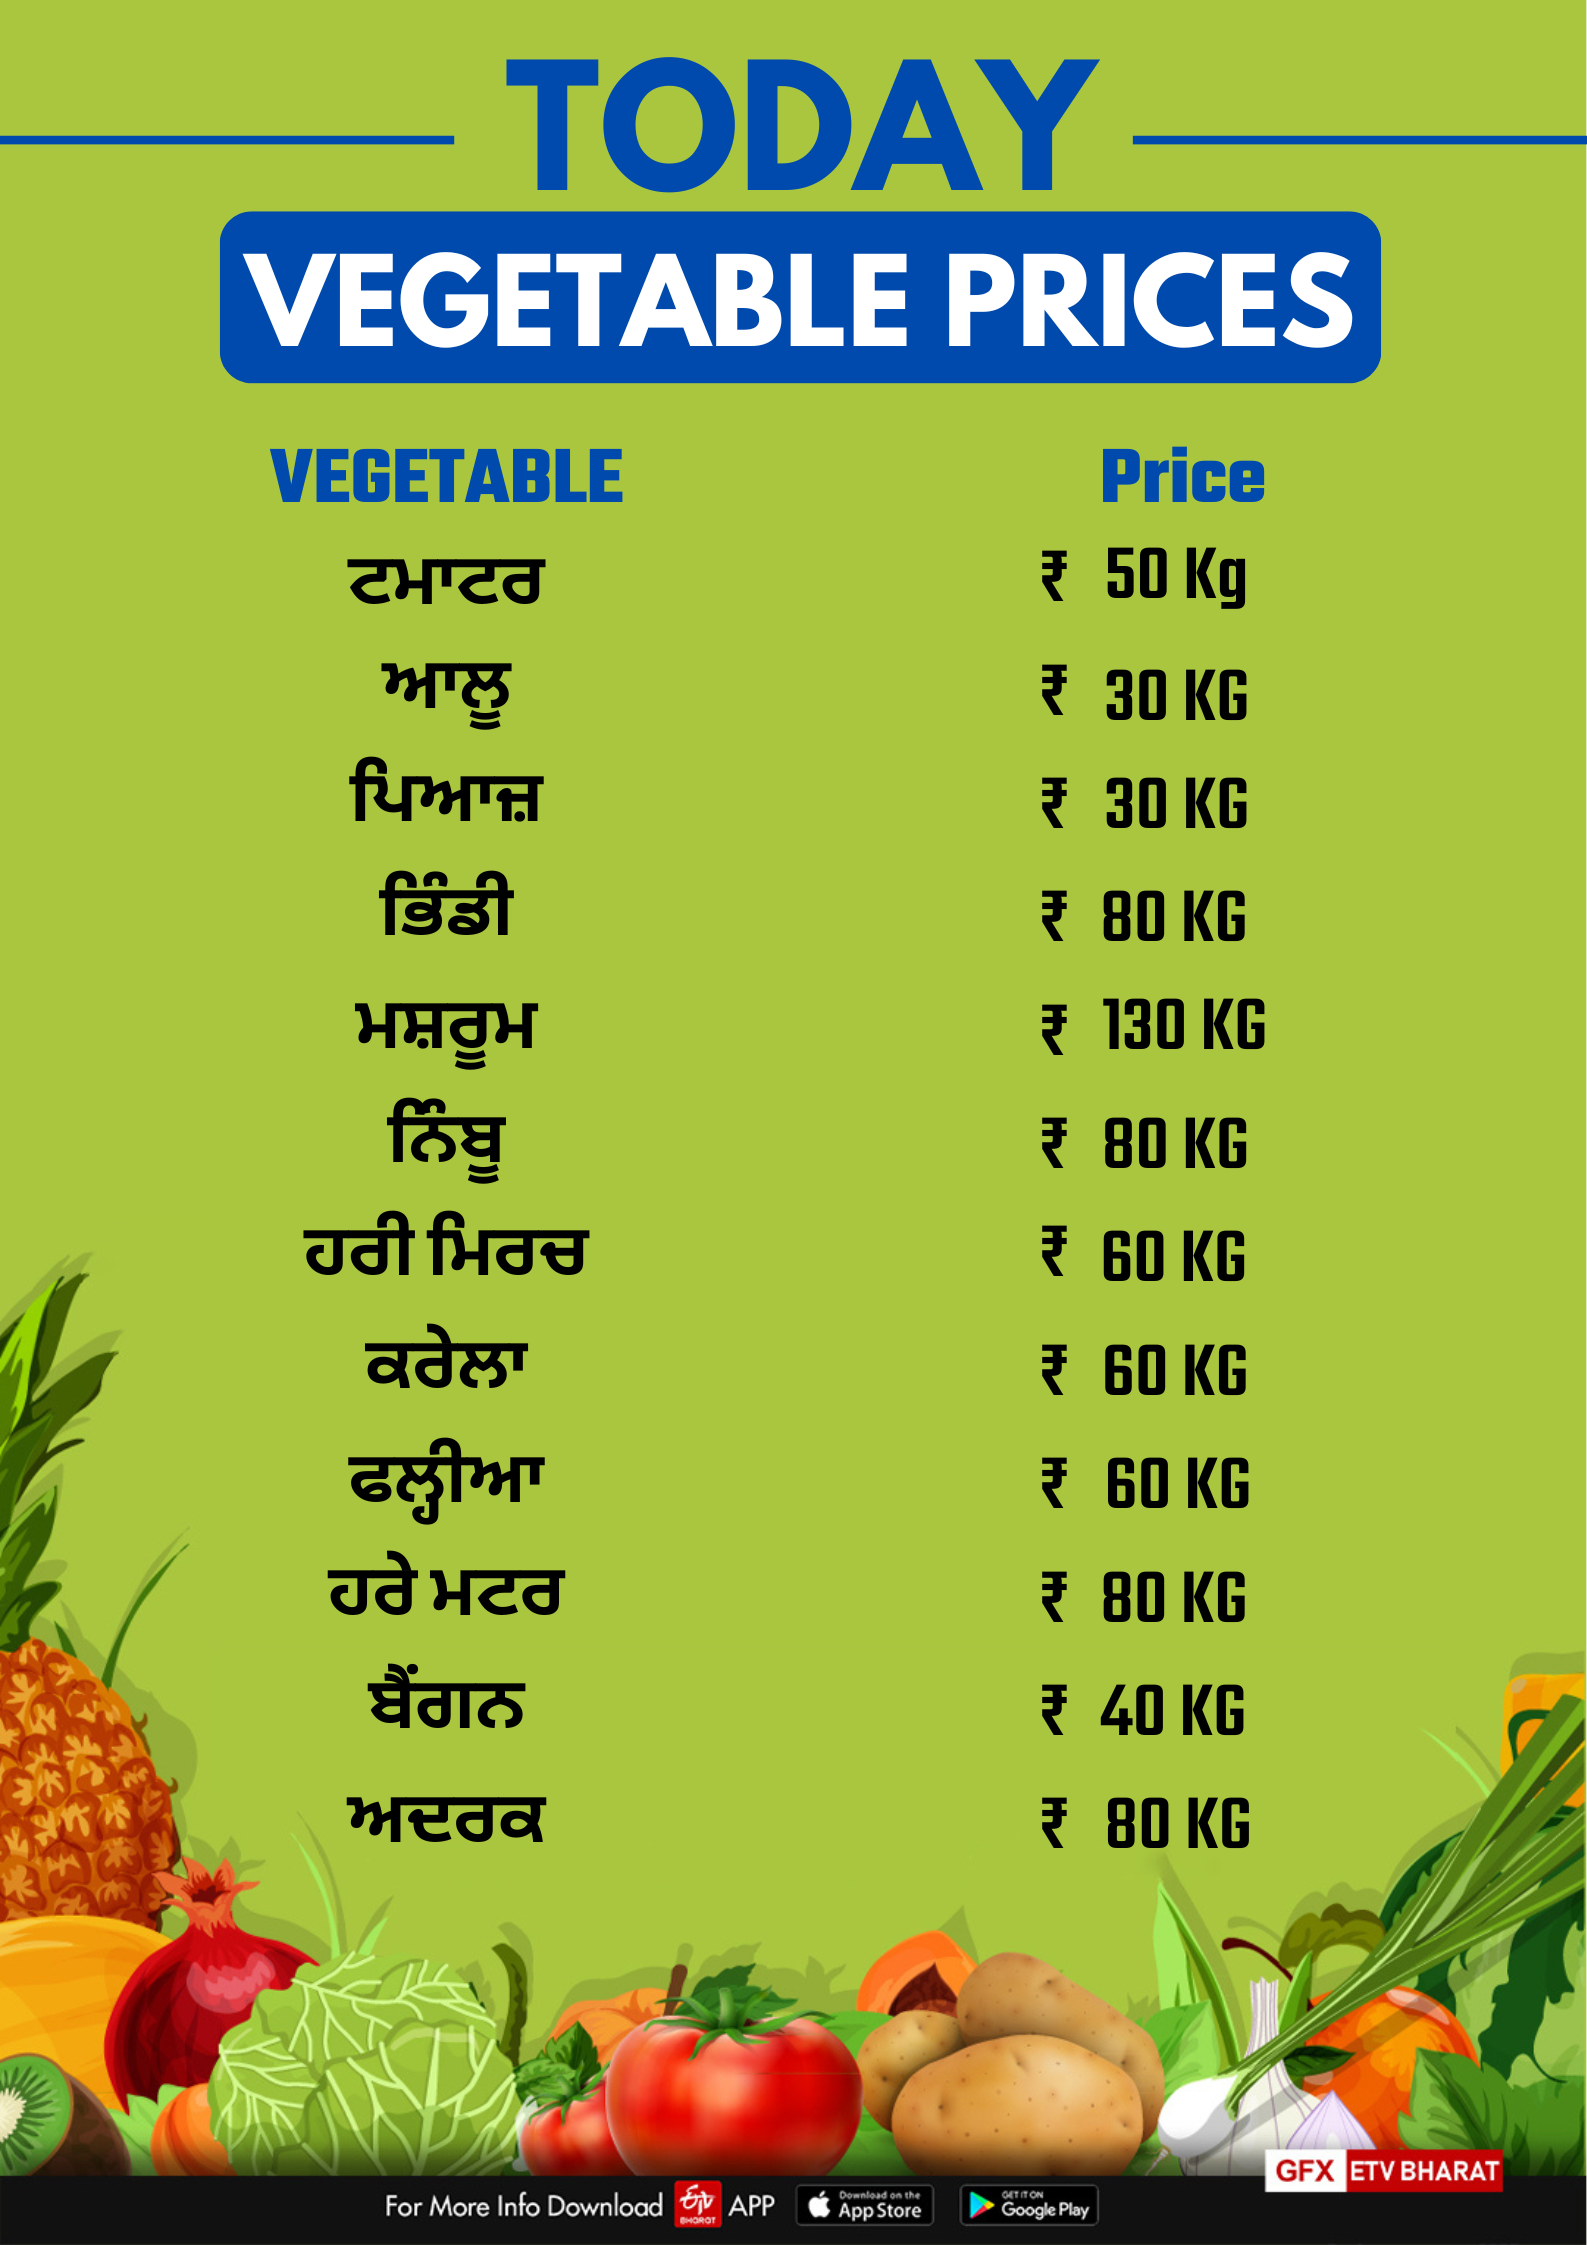 Vegetable rates in Punjab on September 22